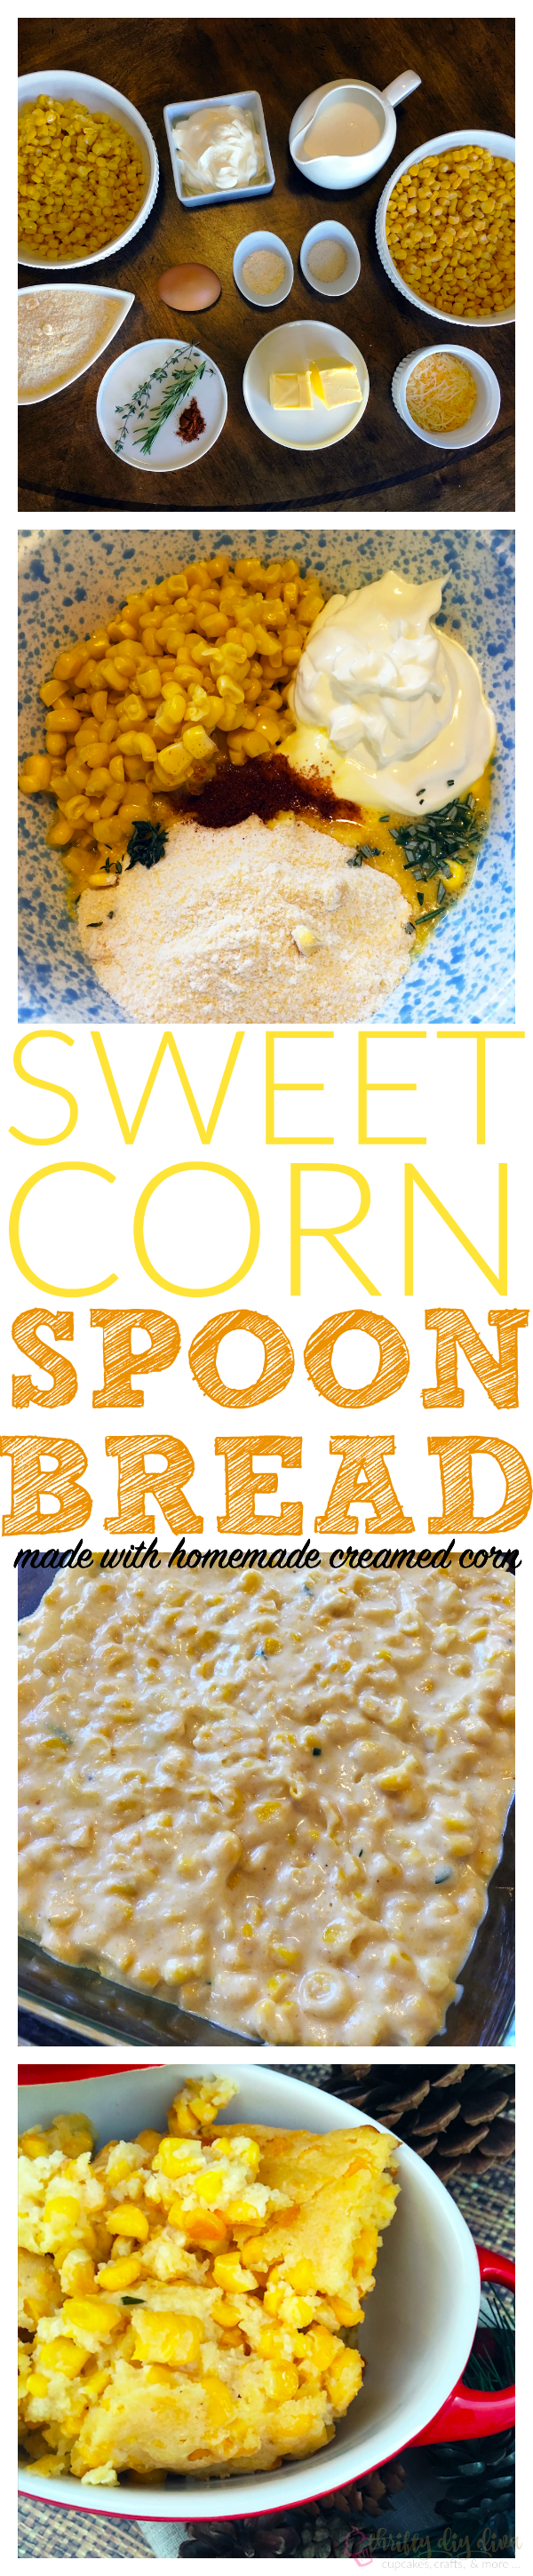 Sweet Corn Spoon Bread Pudding Creamed Recipe